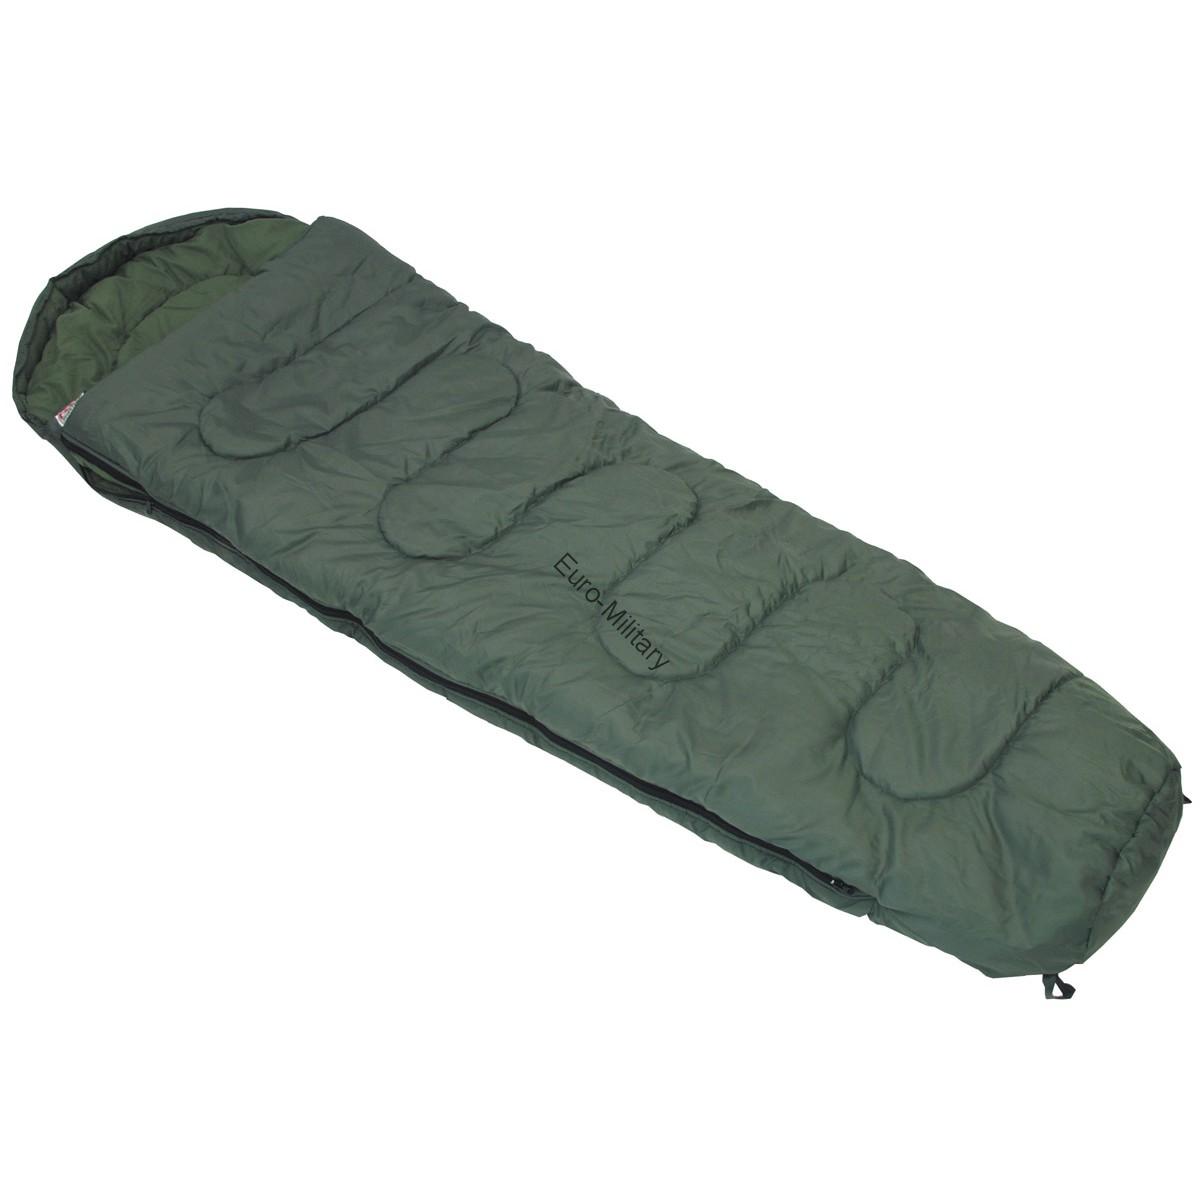 Military Sleeping Bag - Lining 450g qm - OD Green